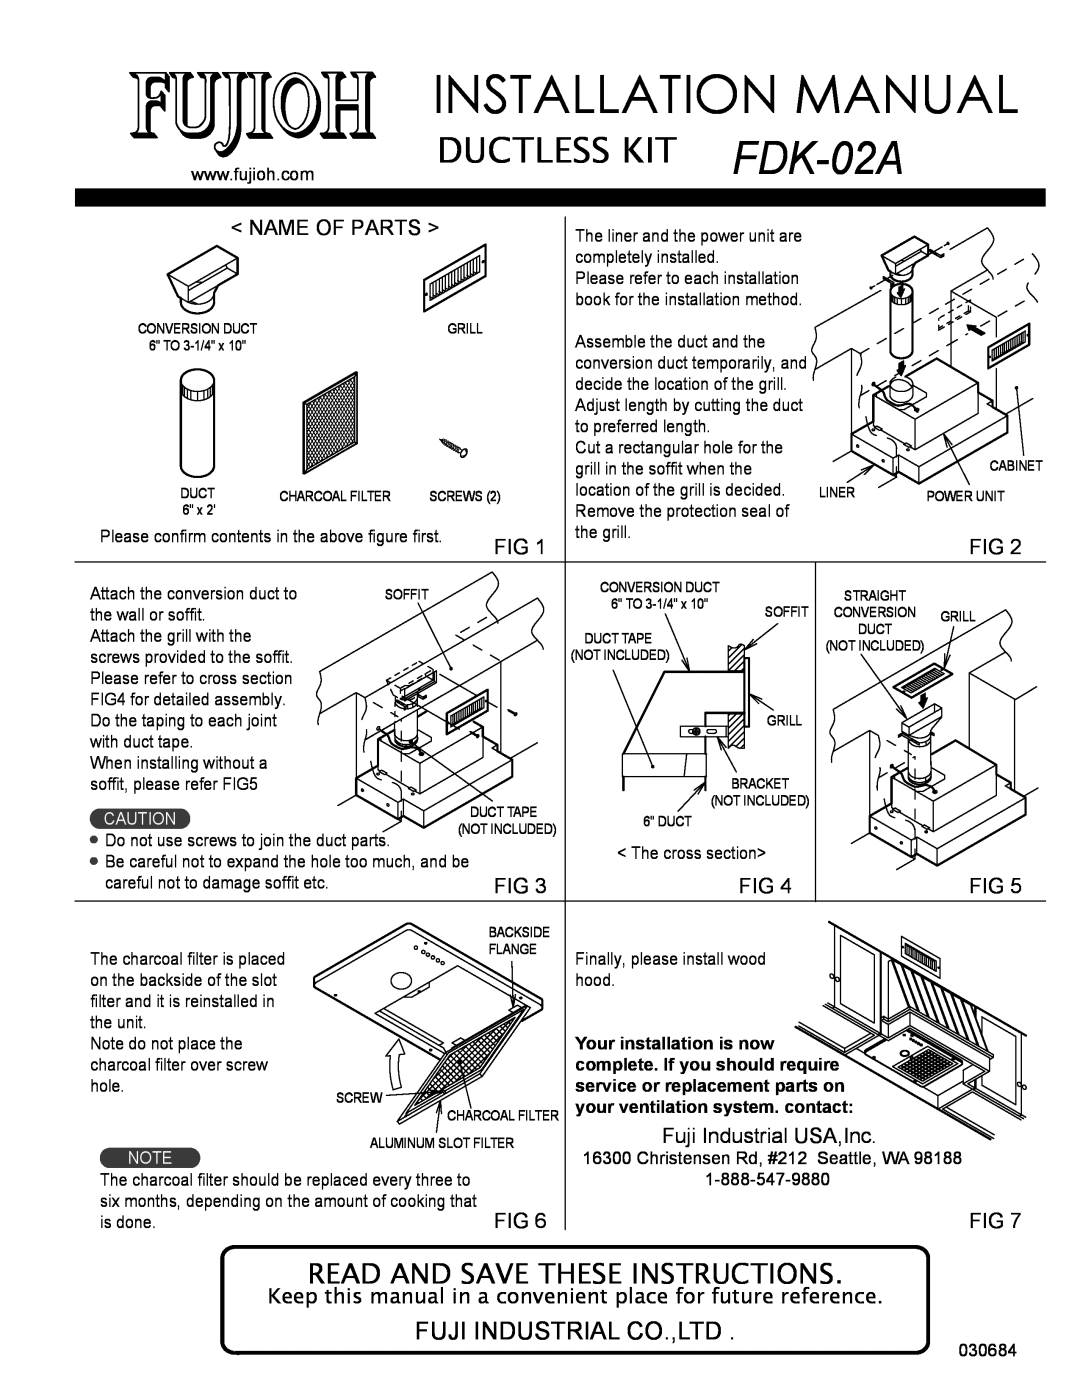 Fujioh FDK-02A installation manual Installation Manual, Ductless Kit, Name Of Parts, Fuji Industrial USA,Inc 